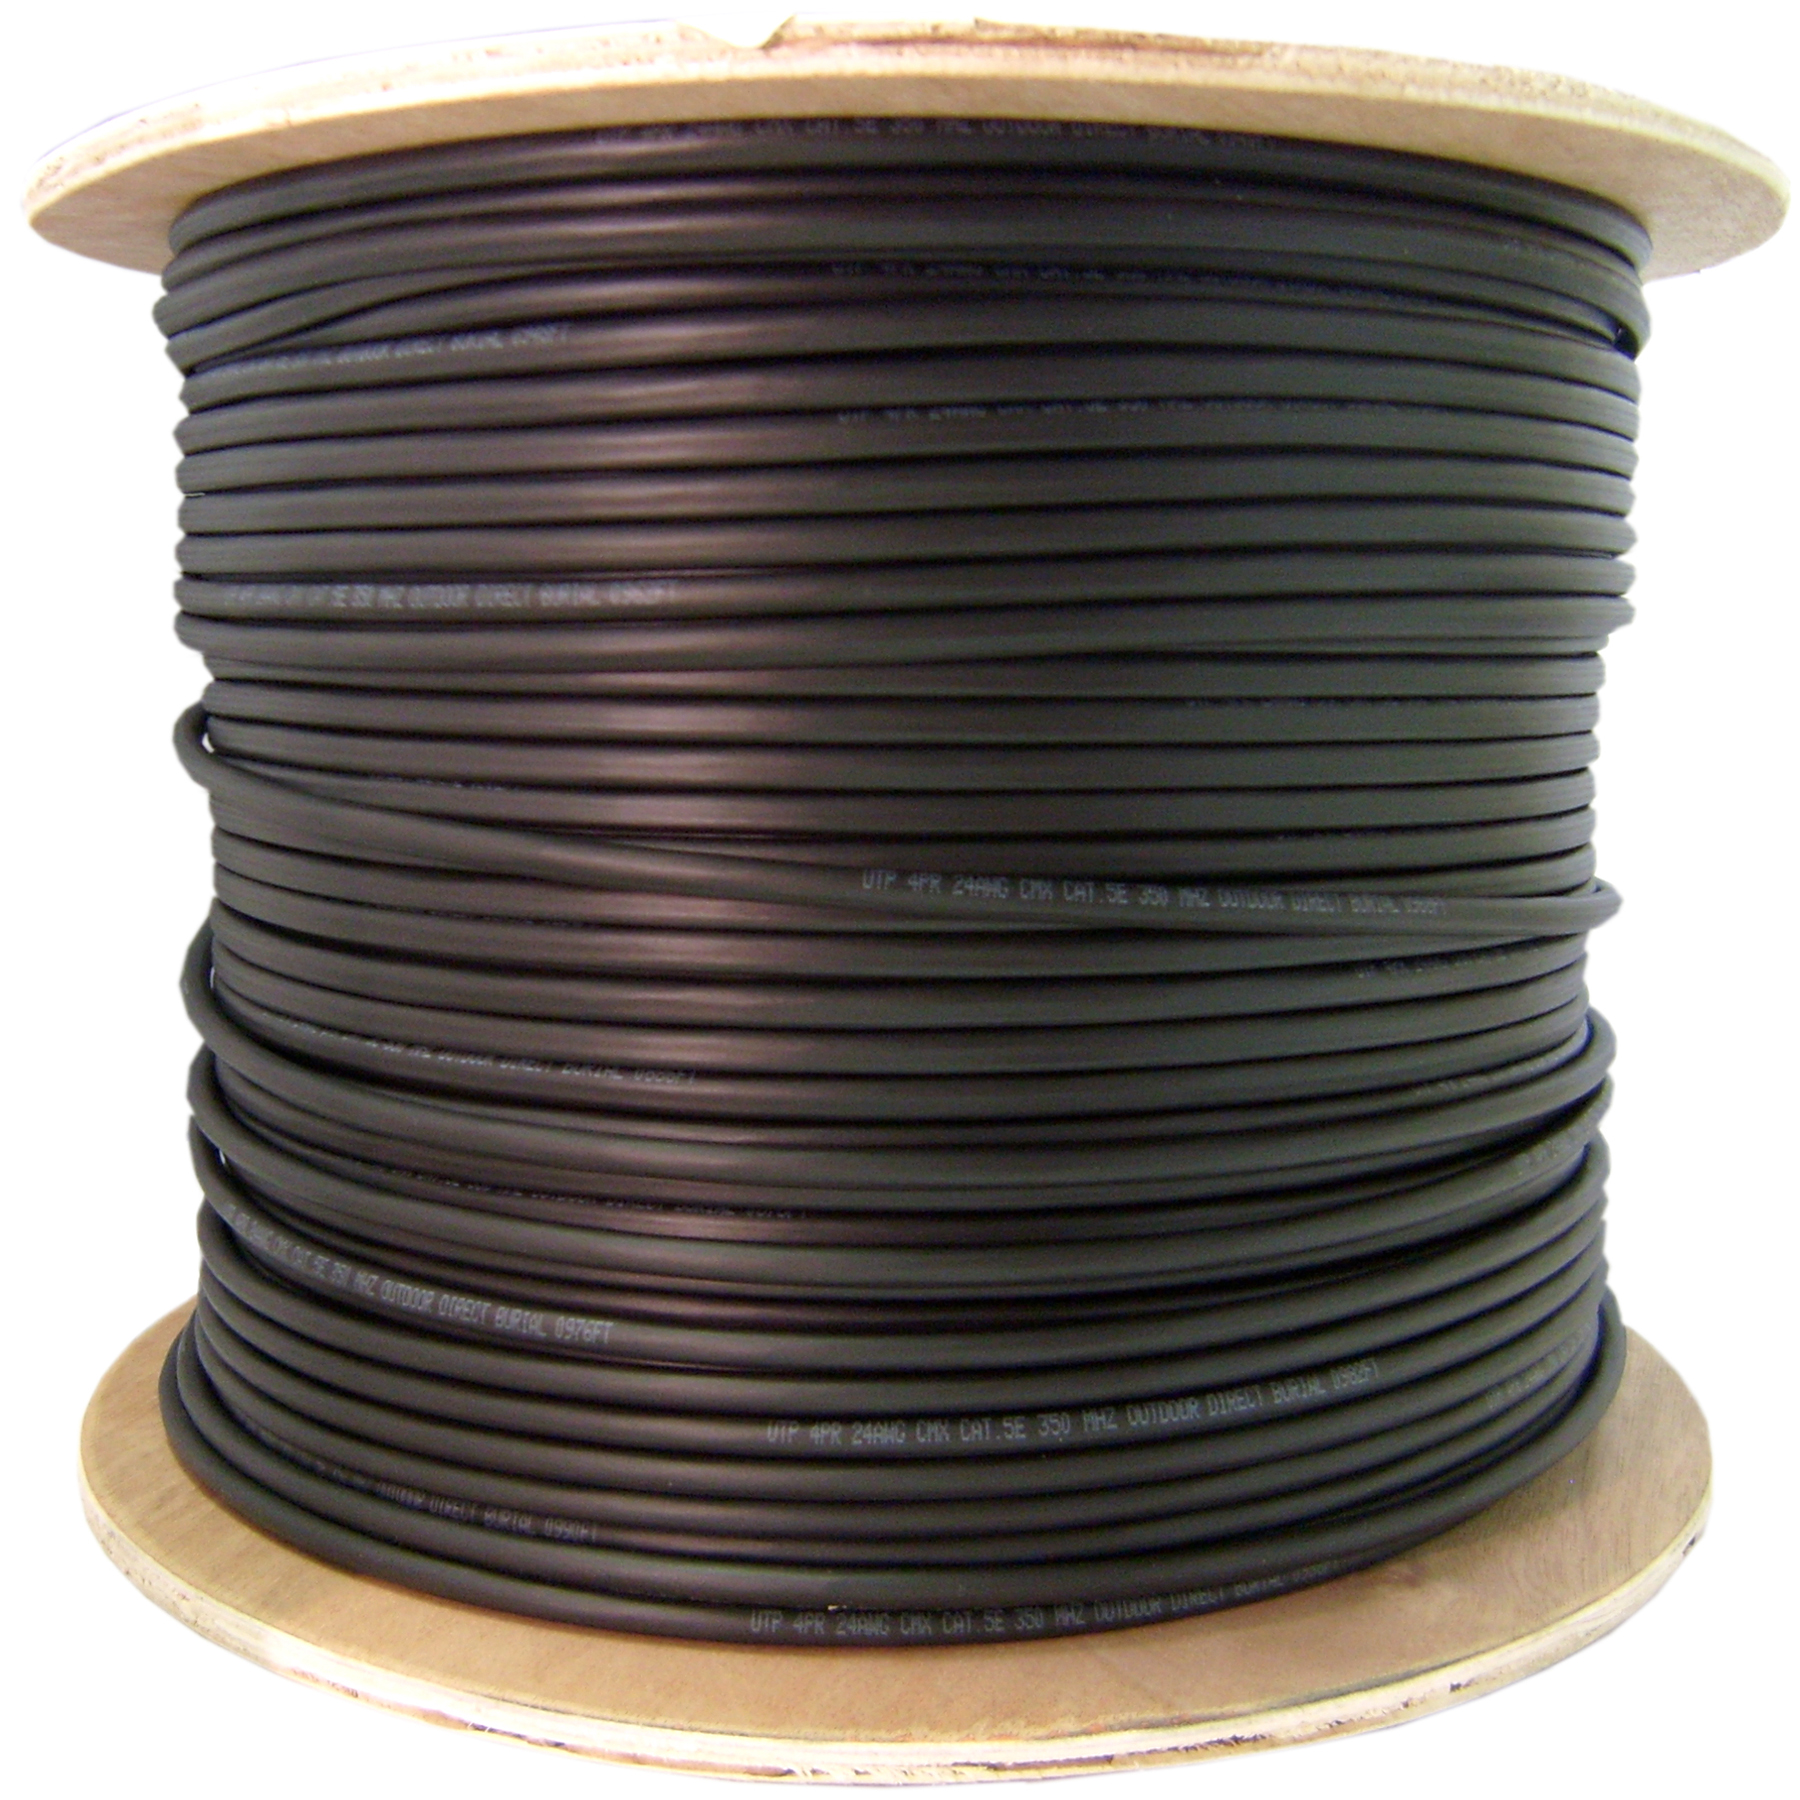 6 Fiber Indoor/Outdoor Fiber Optic Cable, Multimode 50/125 OM3, Plenum Rated, Black, Spool, 1000ft - image 1 of 1